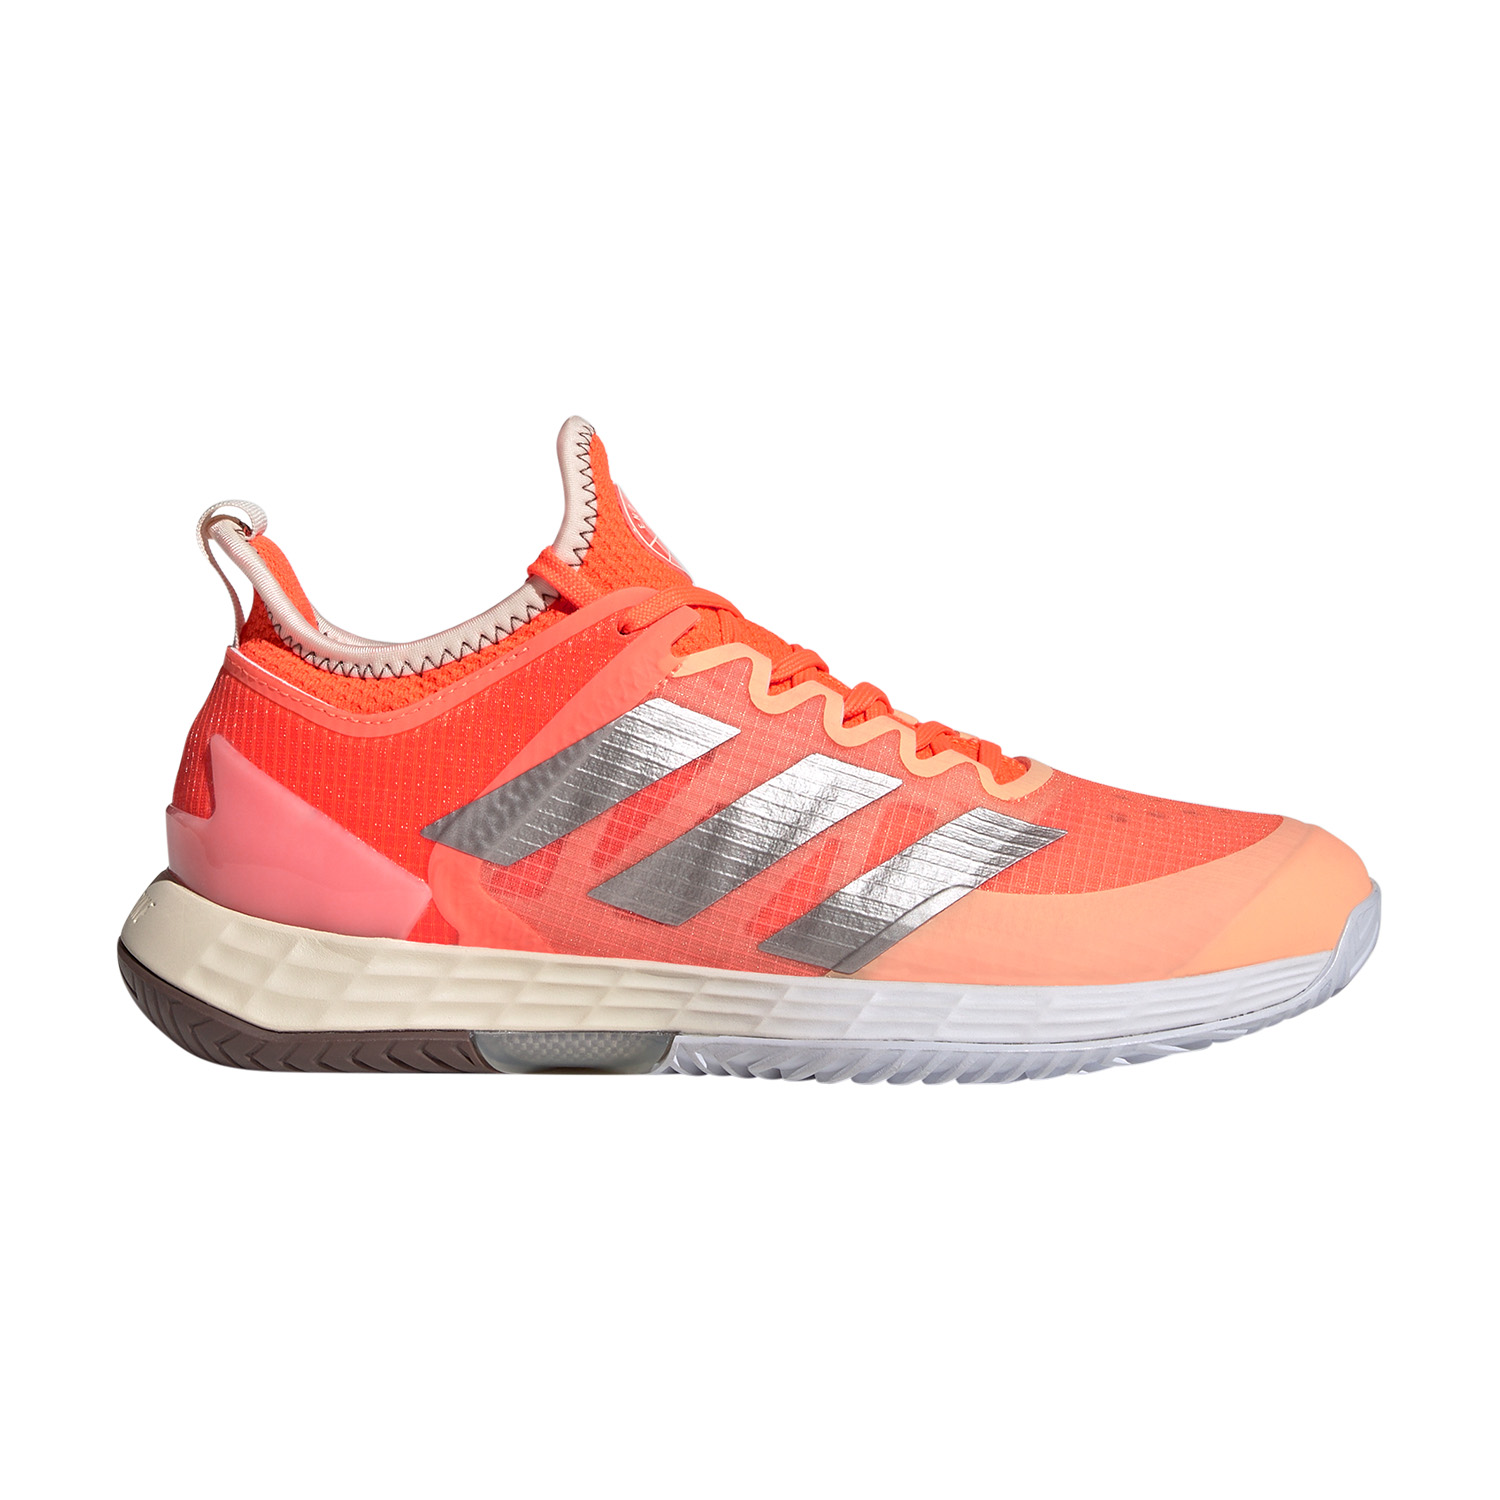 adidas adizero Ubersonic 4 Women's Tennis Shoes - Solar Orange